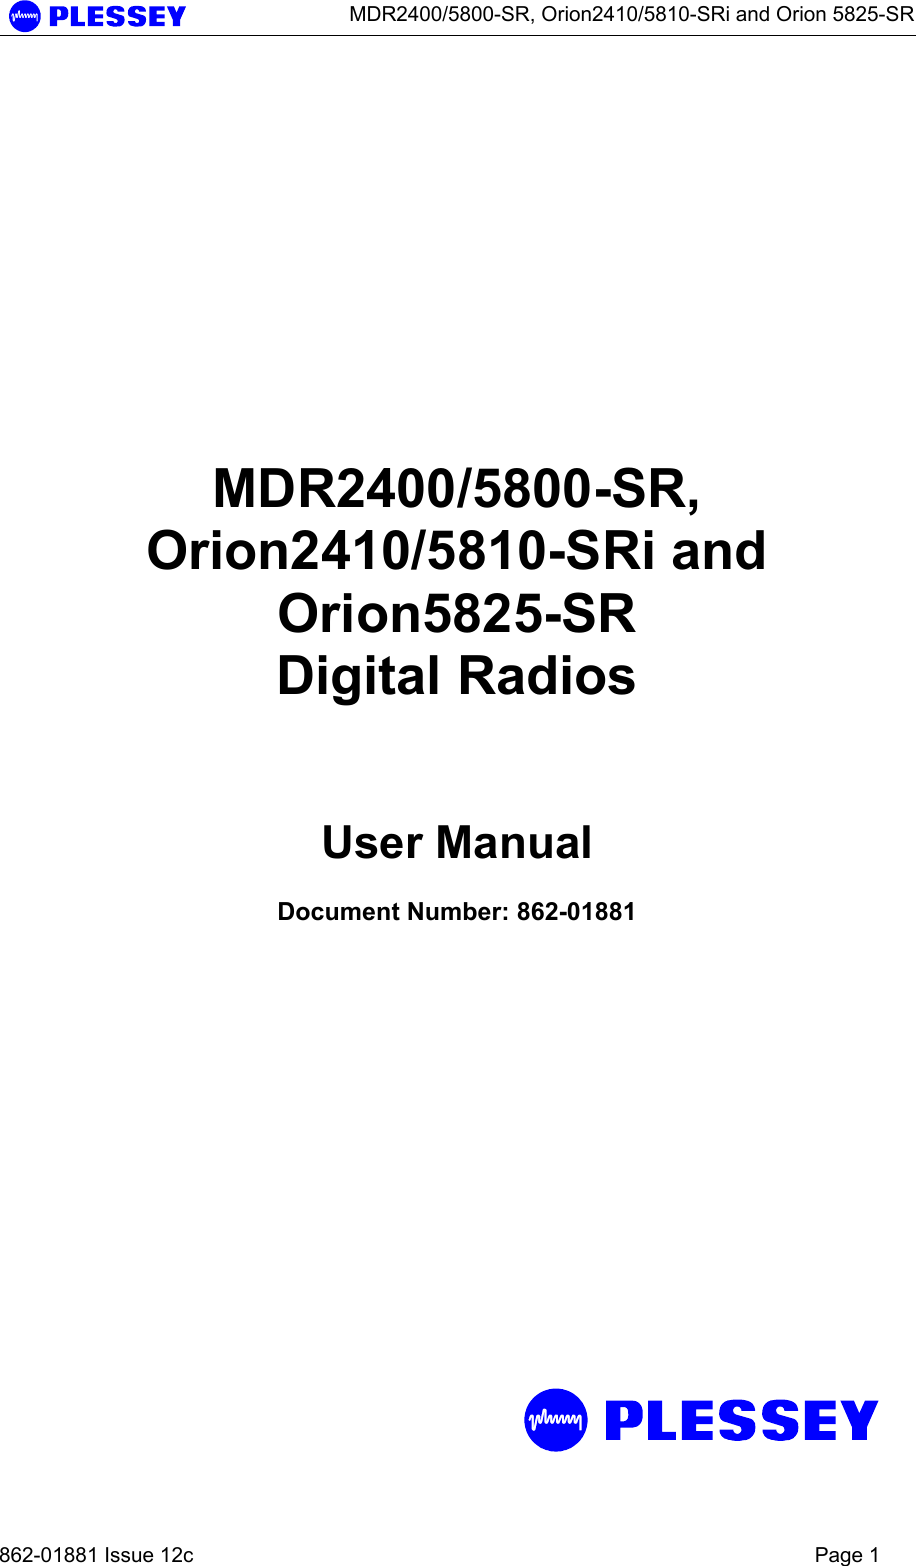      MDR2400/5800-SR, Orion2410/5810-SRi and Orion 5825-SR   862-01881 Issue 12c    Page 1       MDR2400/5800-SR, Orion2410/5810-SRi and Orion5825-SR Digital Radios    User Manual  Document Number: 862-01881  